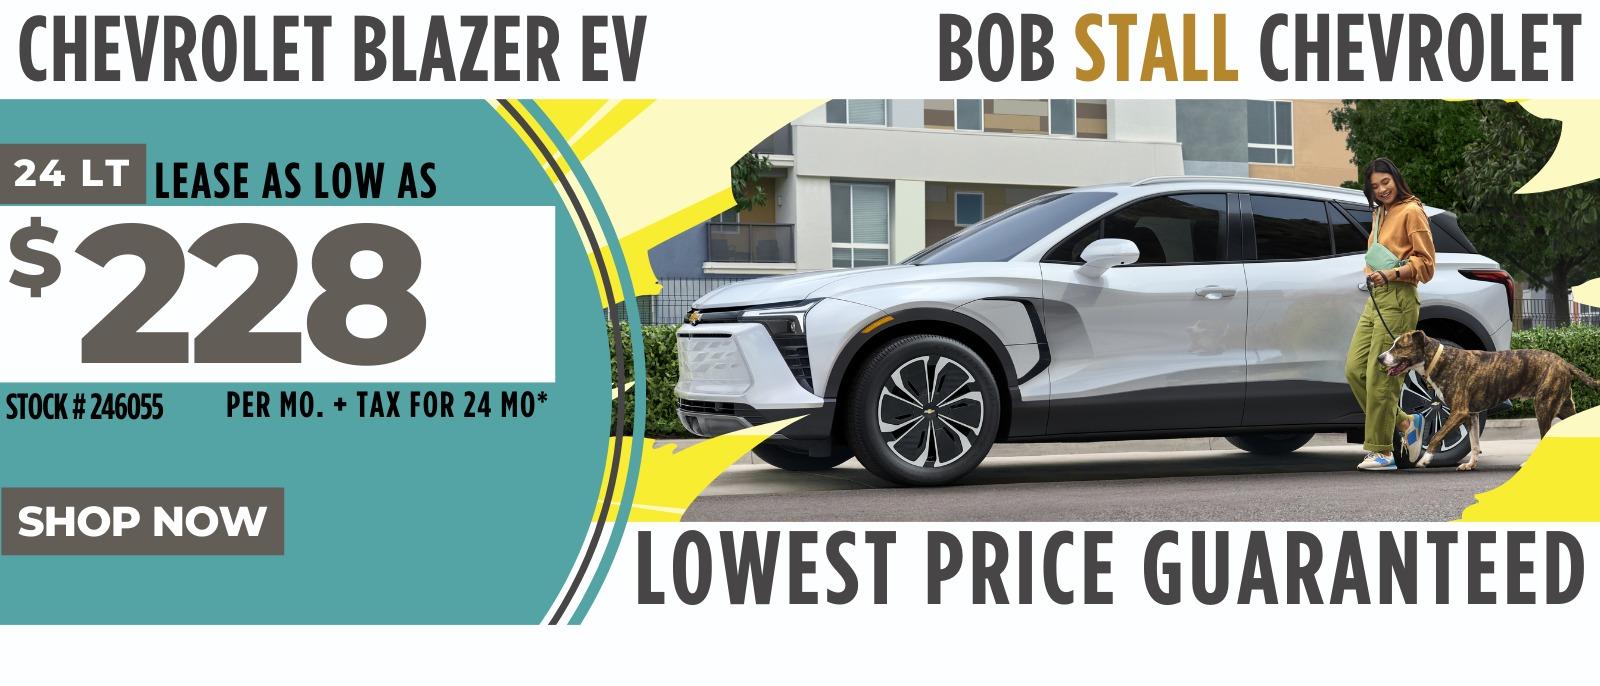 2024 Blazer EV Savings - Lease as low as $228 per month for 24 Months